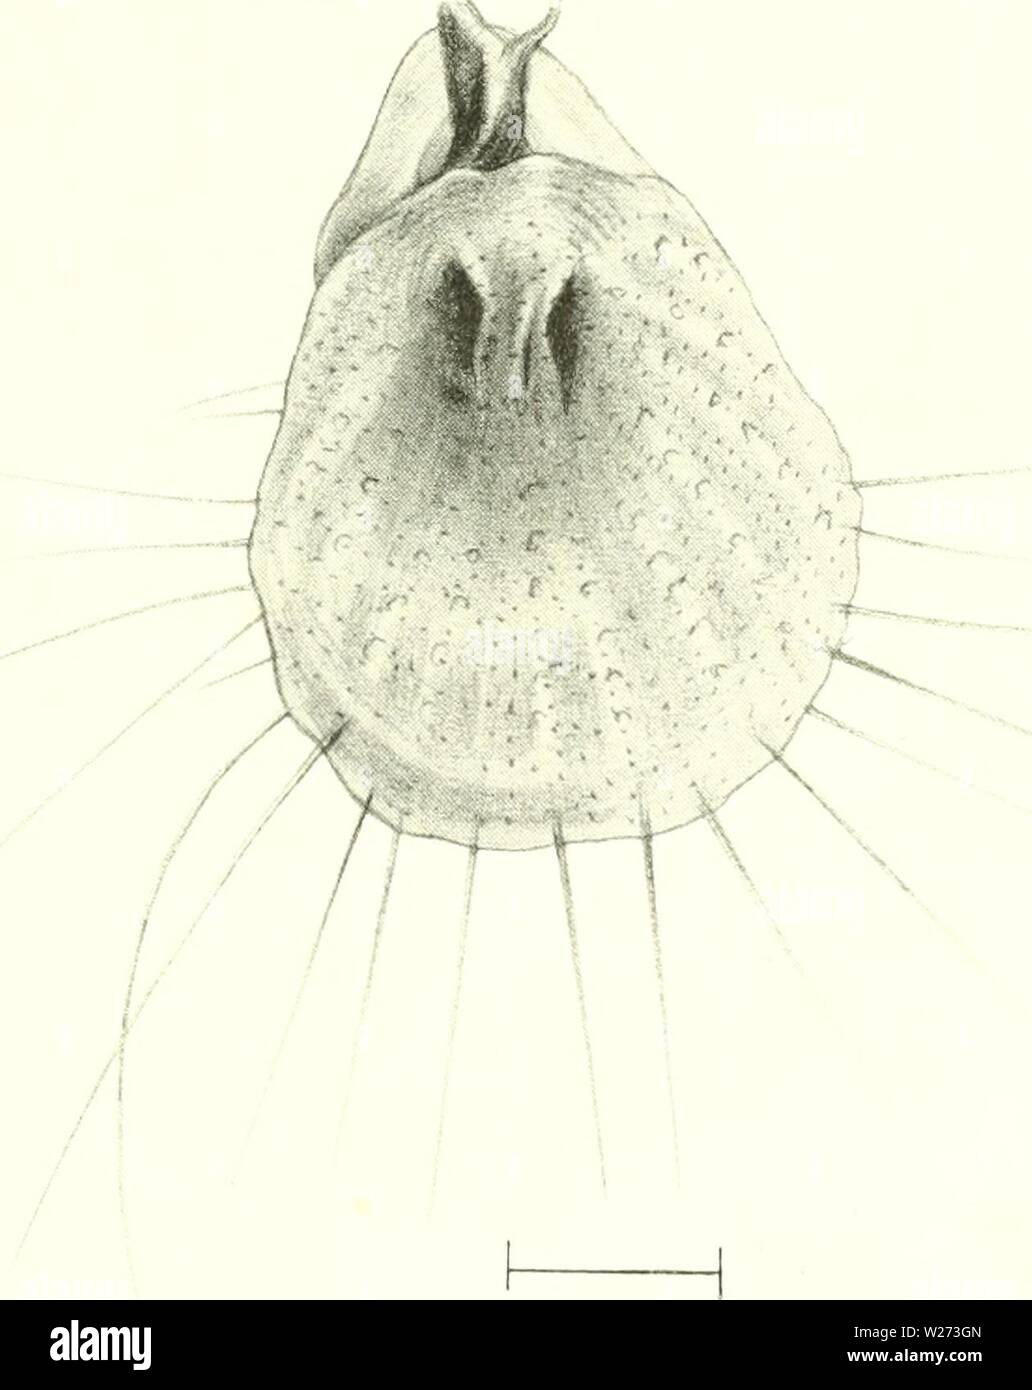 Image d'archive à partir de la page 36 de l'expédition-Ingolf danois (1899-1953). L'expédition danoise Ingolf-danishingolfex daniuoft4CPT11Année : 1899-1953 ''k. 1. TerebmtuKna retusa il.i. II. Anthon del. J'ig. 3. Terebratulina septentrionalis (Couth.). II. Anthon del. J'ai mm I i' jeune spécimen de Terebratulina retusa (L.). II. Anthon del. Banque D'Images